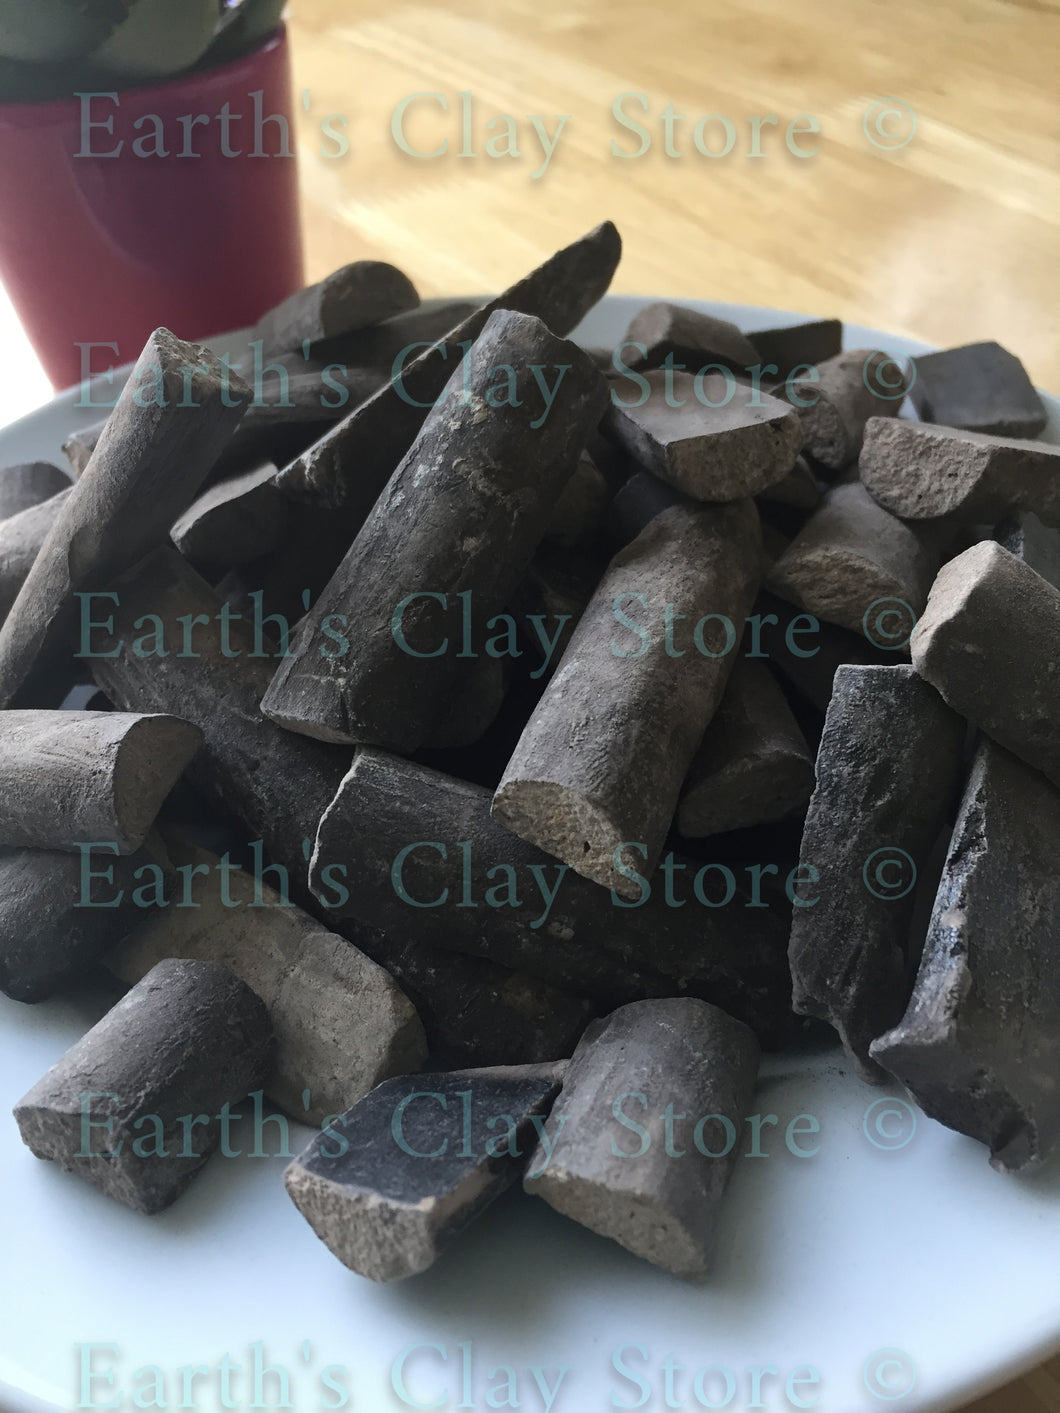 Smoked edible Clay 